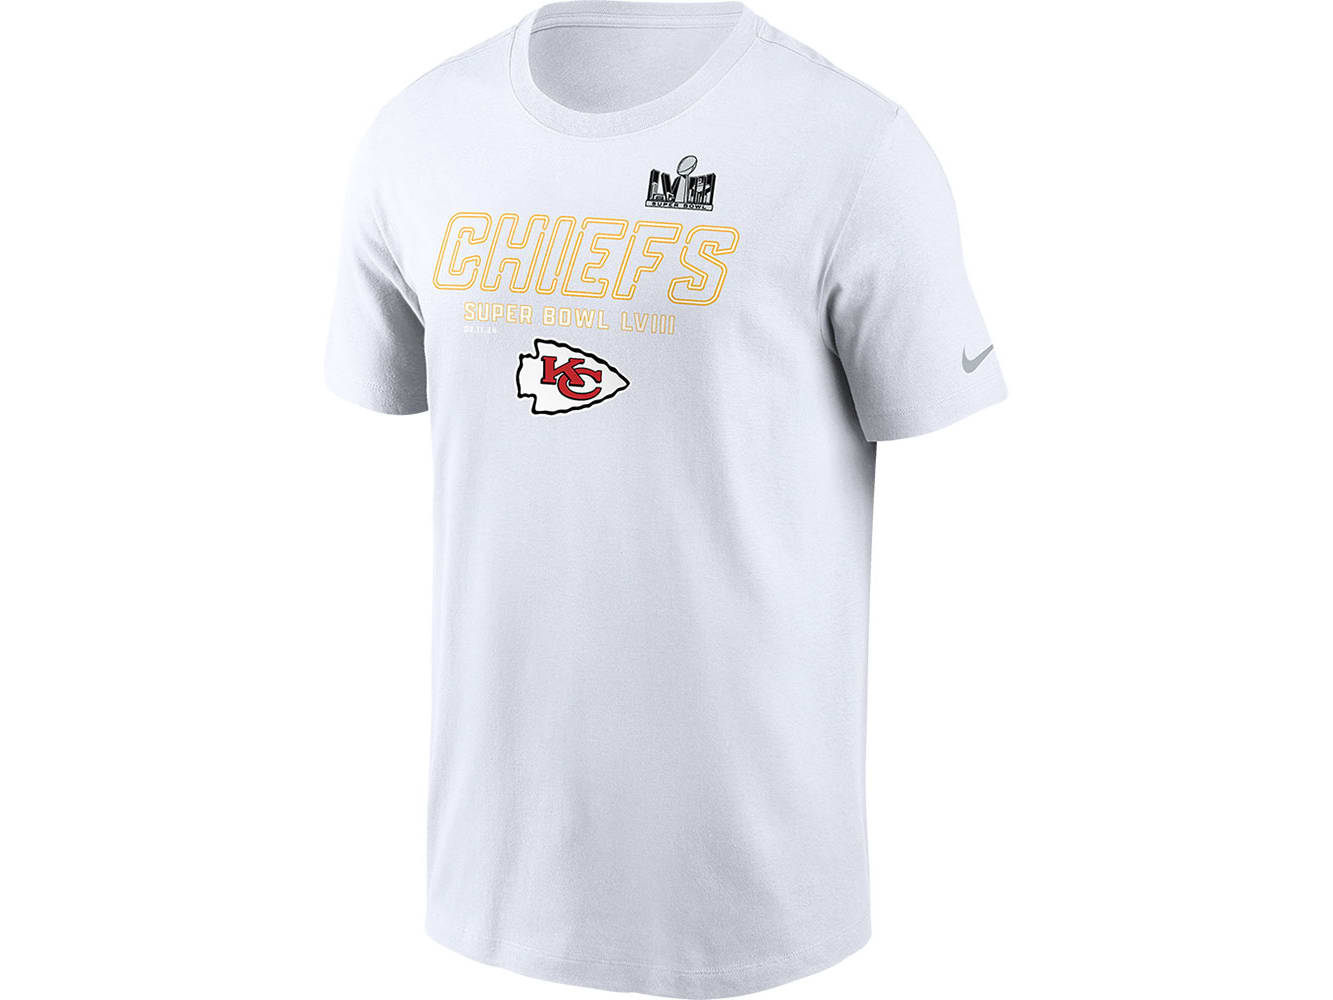 More City Kansas | Shop Shirts T-Shirts Chiefs Chiefs KC &